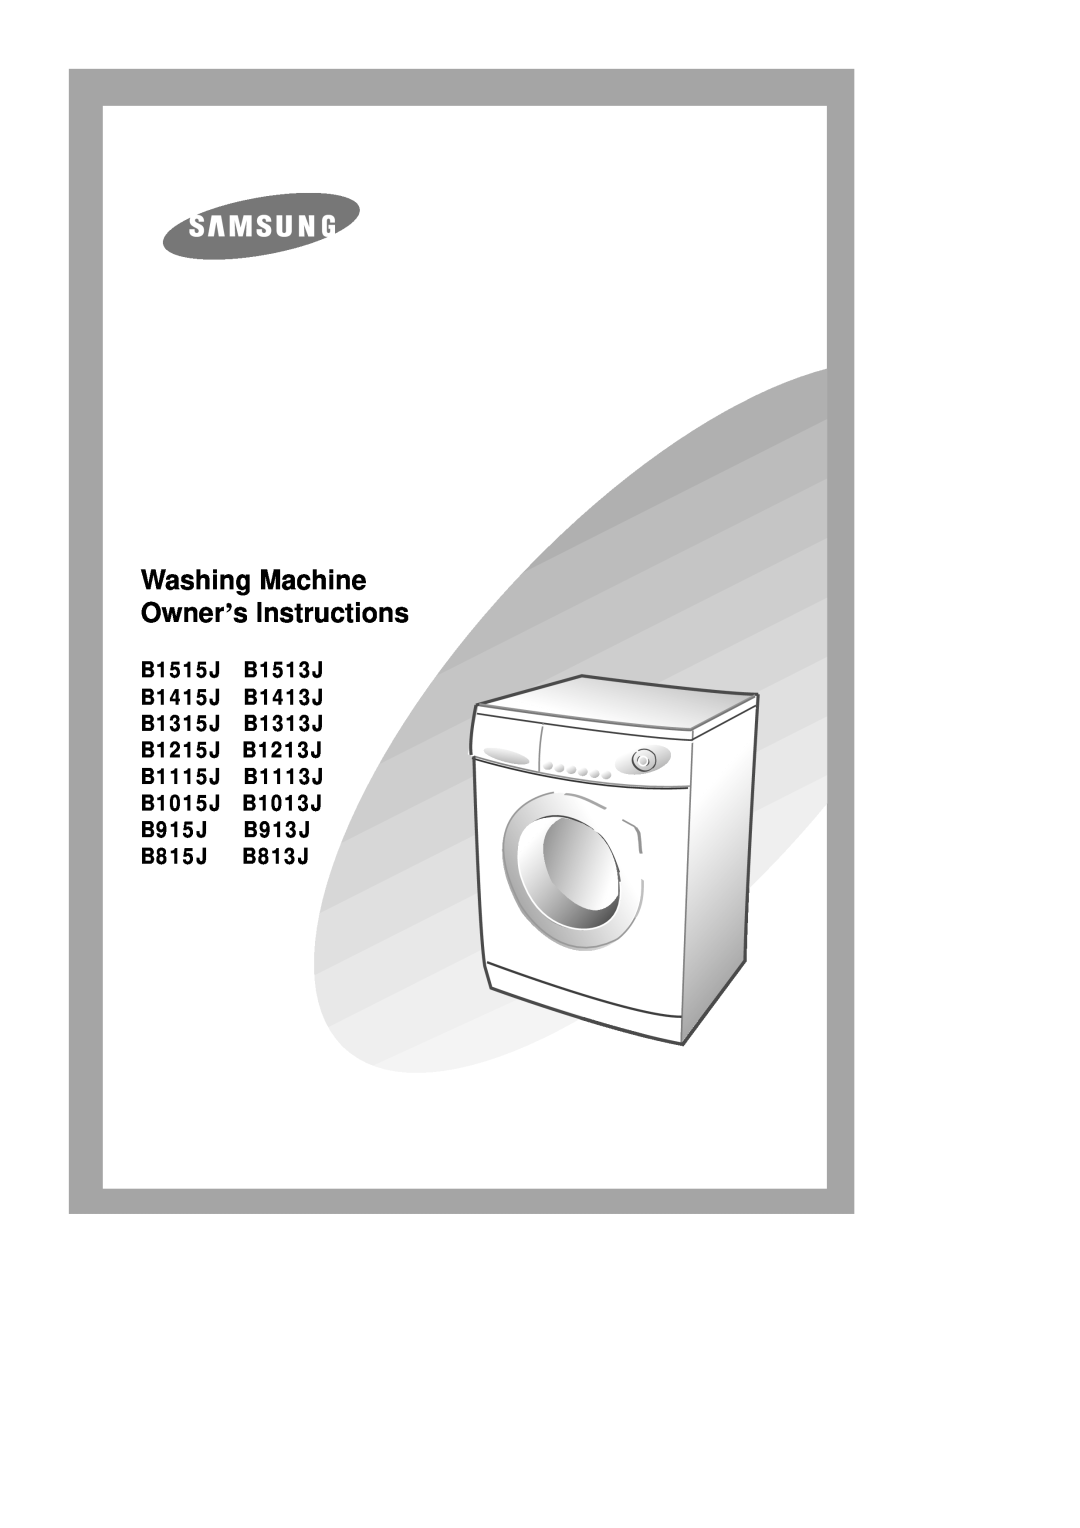 Samsung B1413J, B1415J, B1313J, B1513J manual Washing Machine Owner’s Instructions, B1015J B1013J B915J B913J B815J B813J 